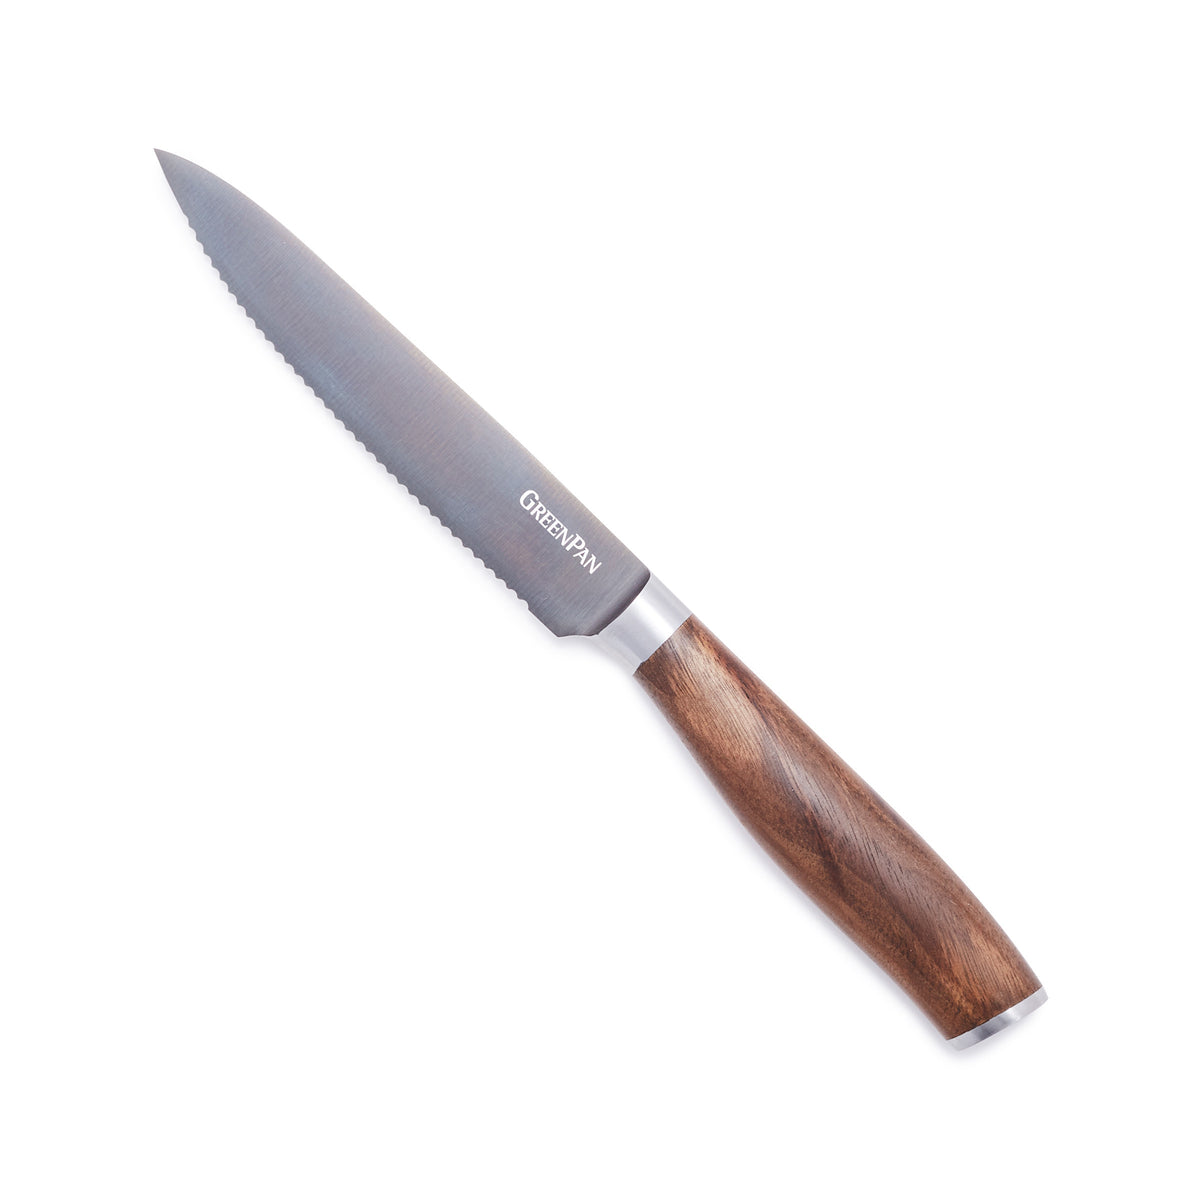 Premiere Titanium Cutlery 5" Serrated Utility Knife with Walnut Handle